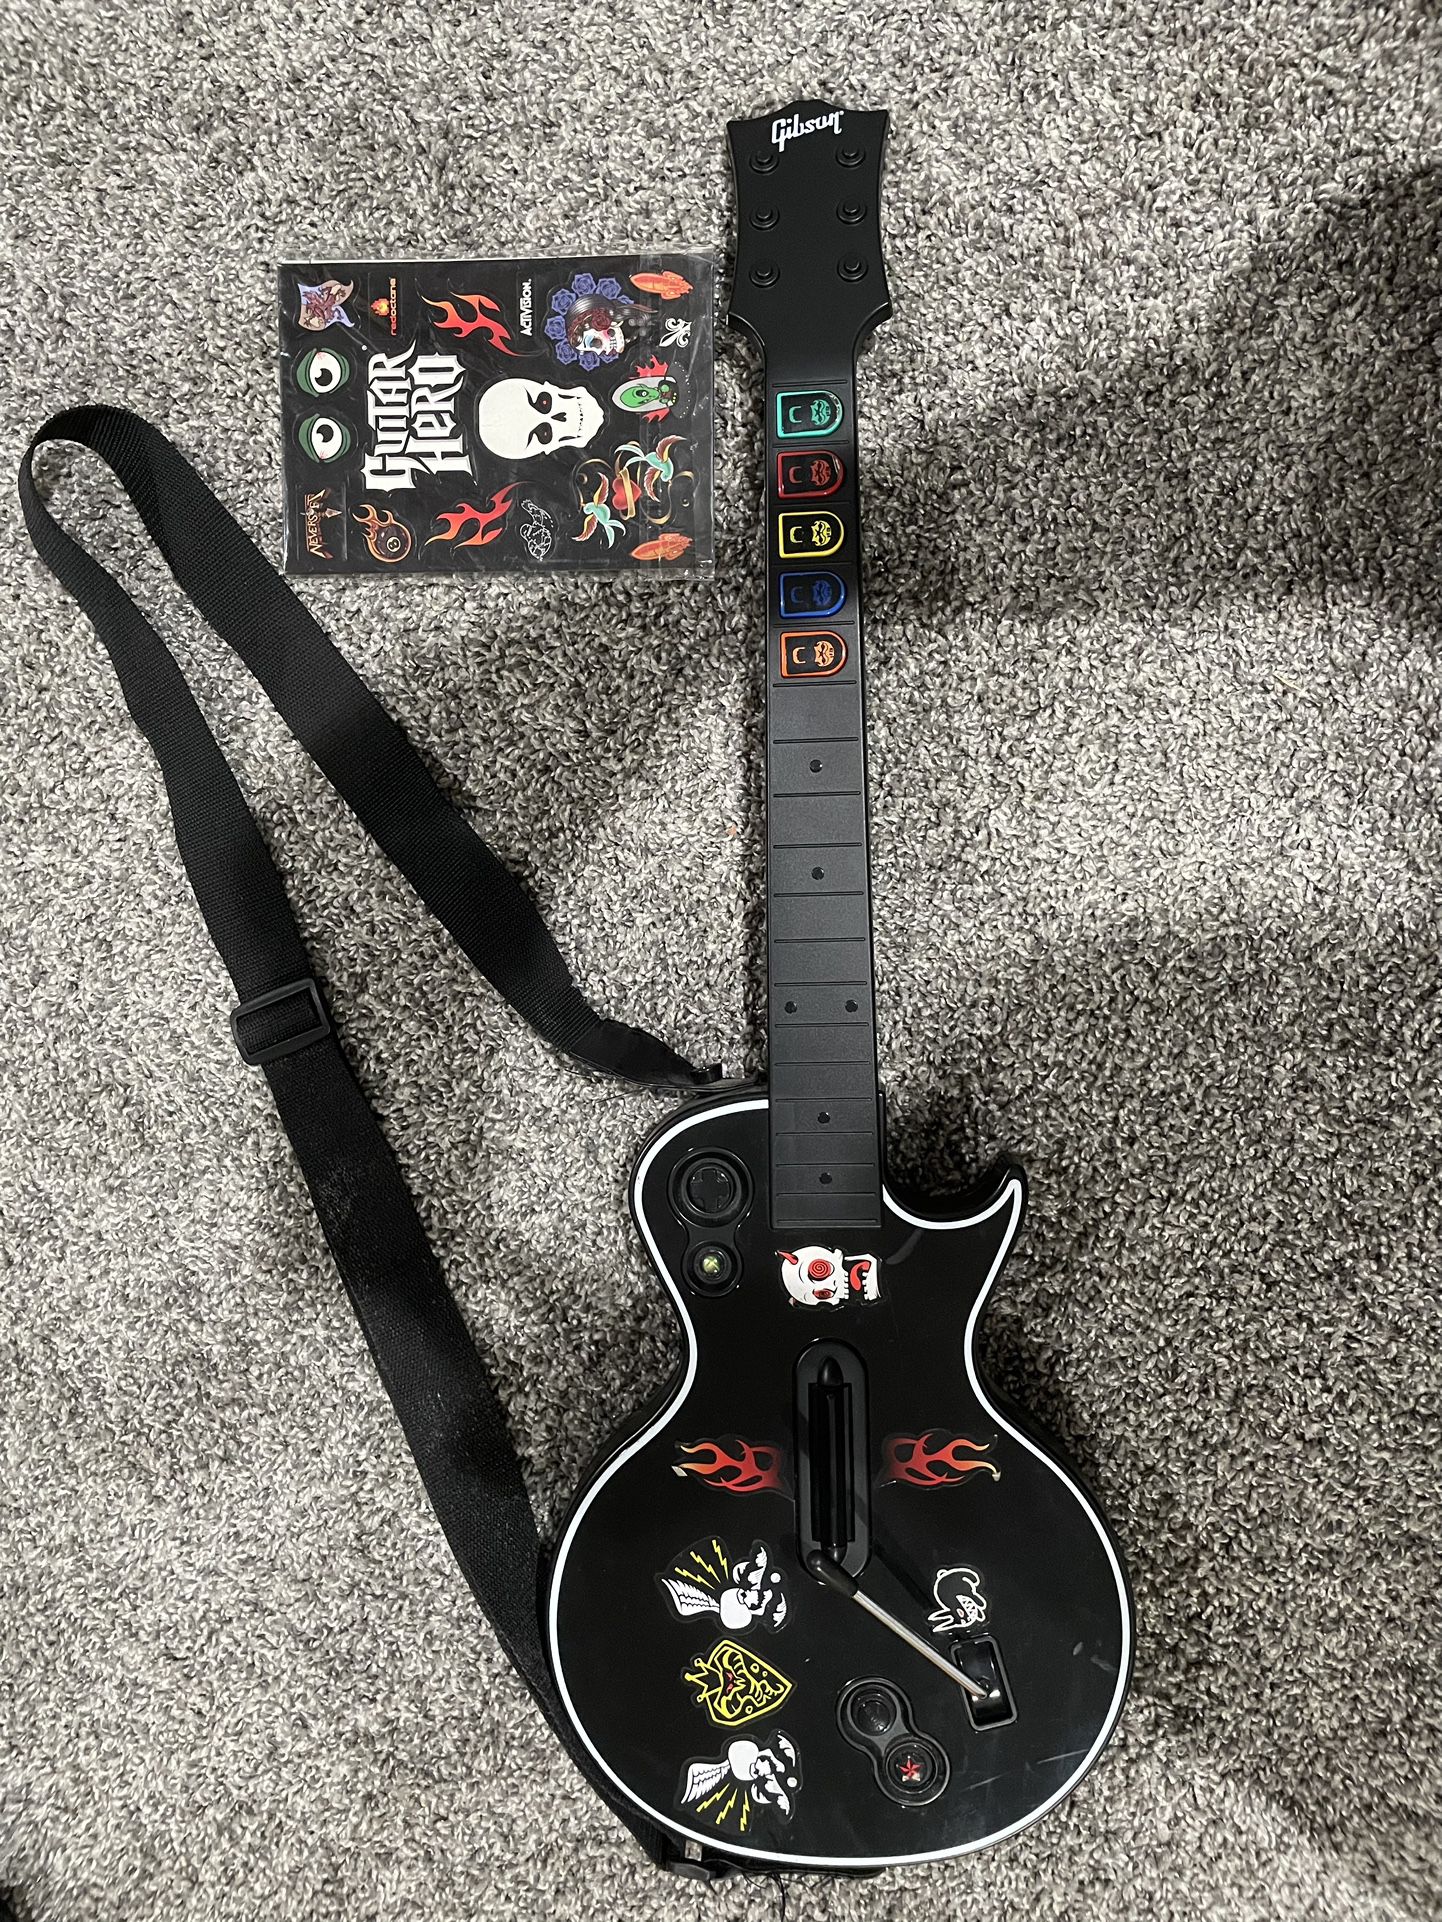 Xbox 360 Guitar Hero III Gibson Les Paul Guitar Controller